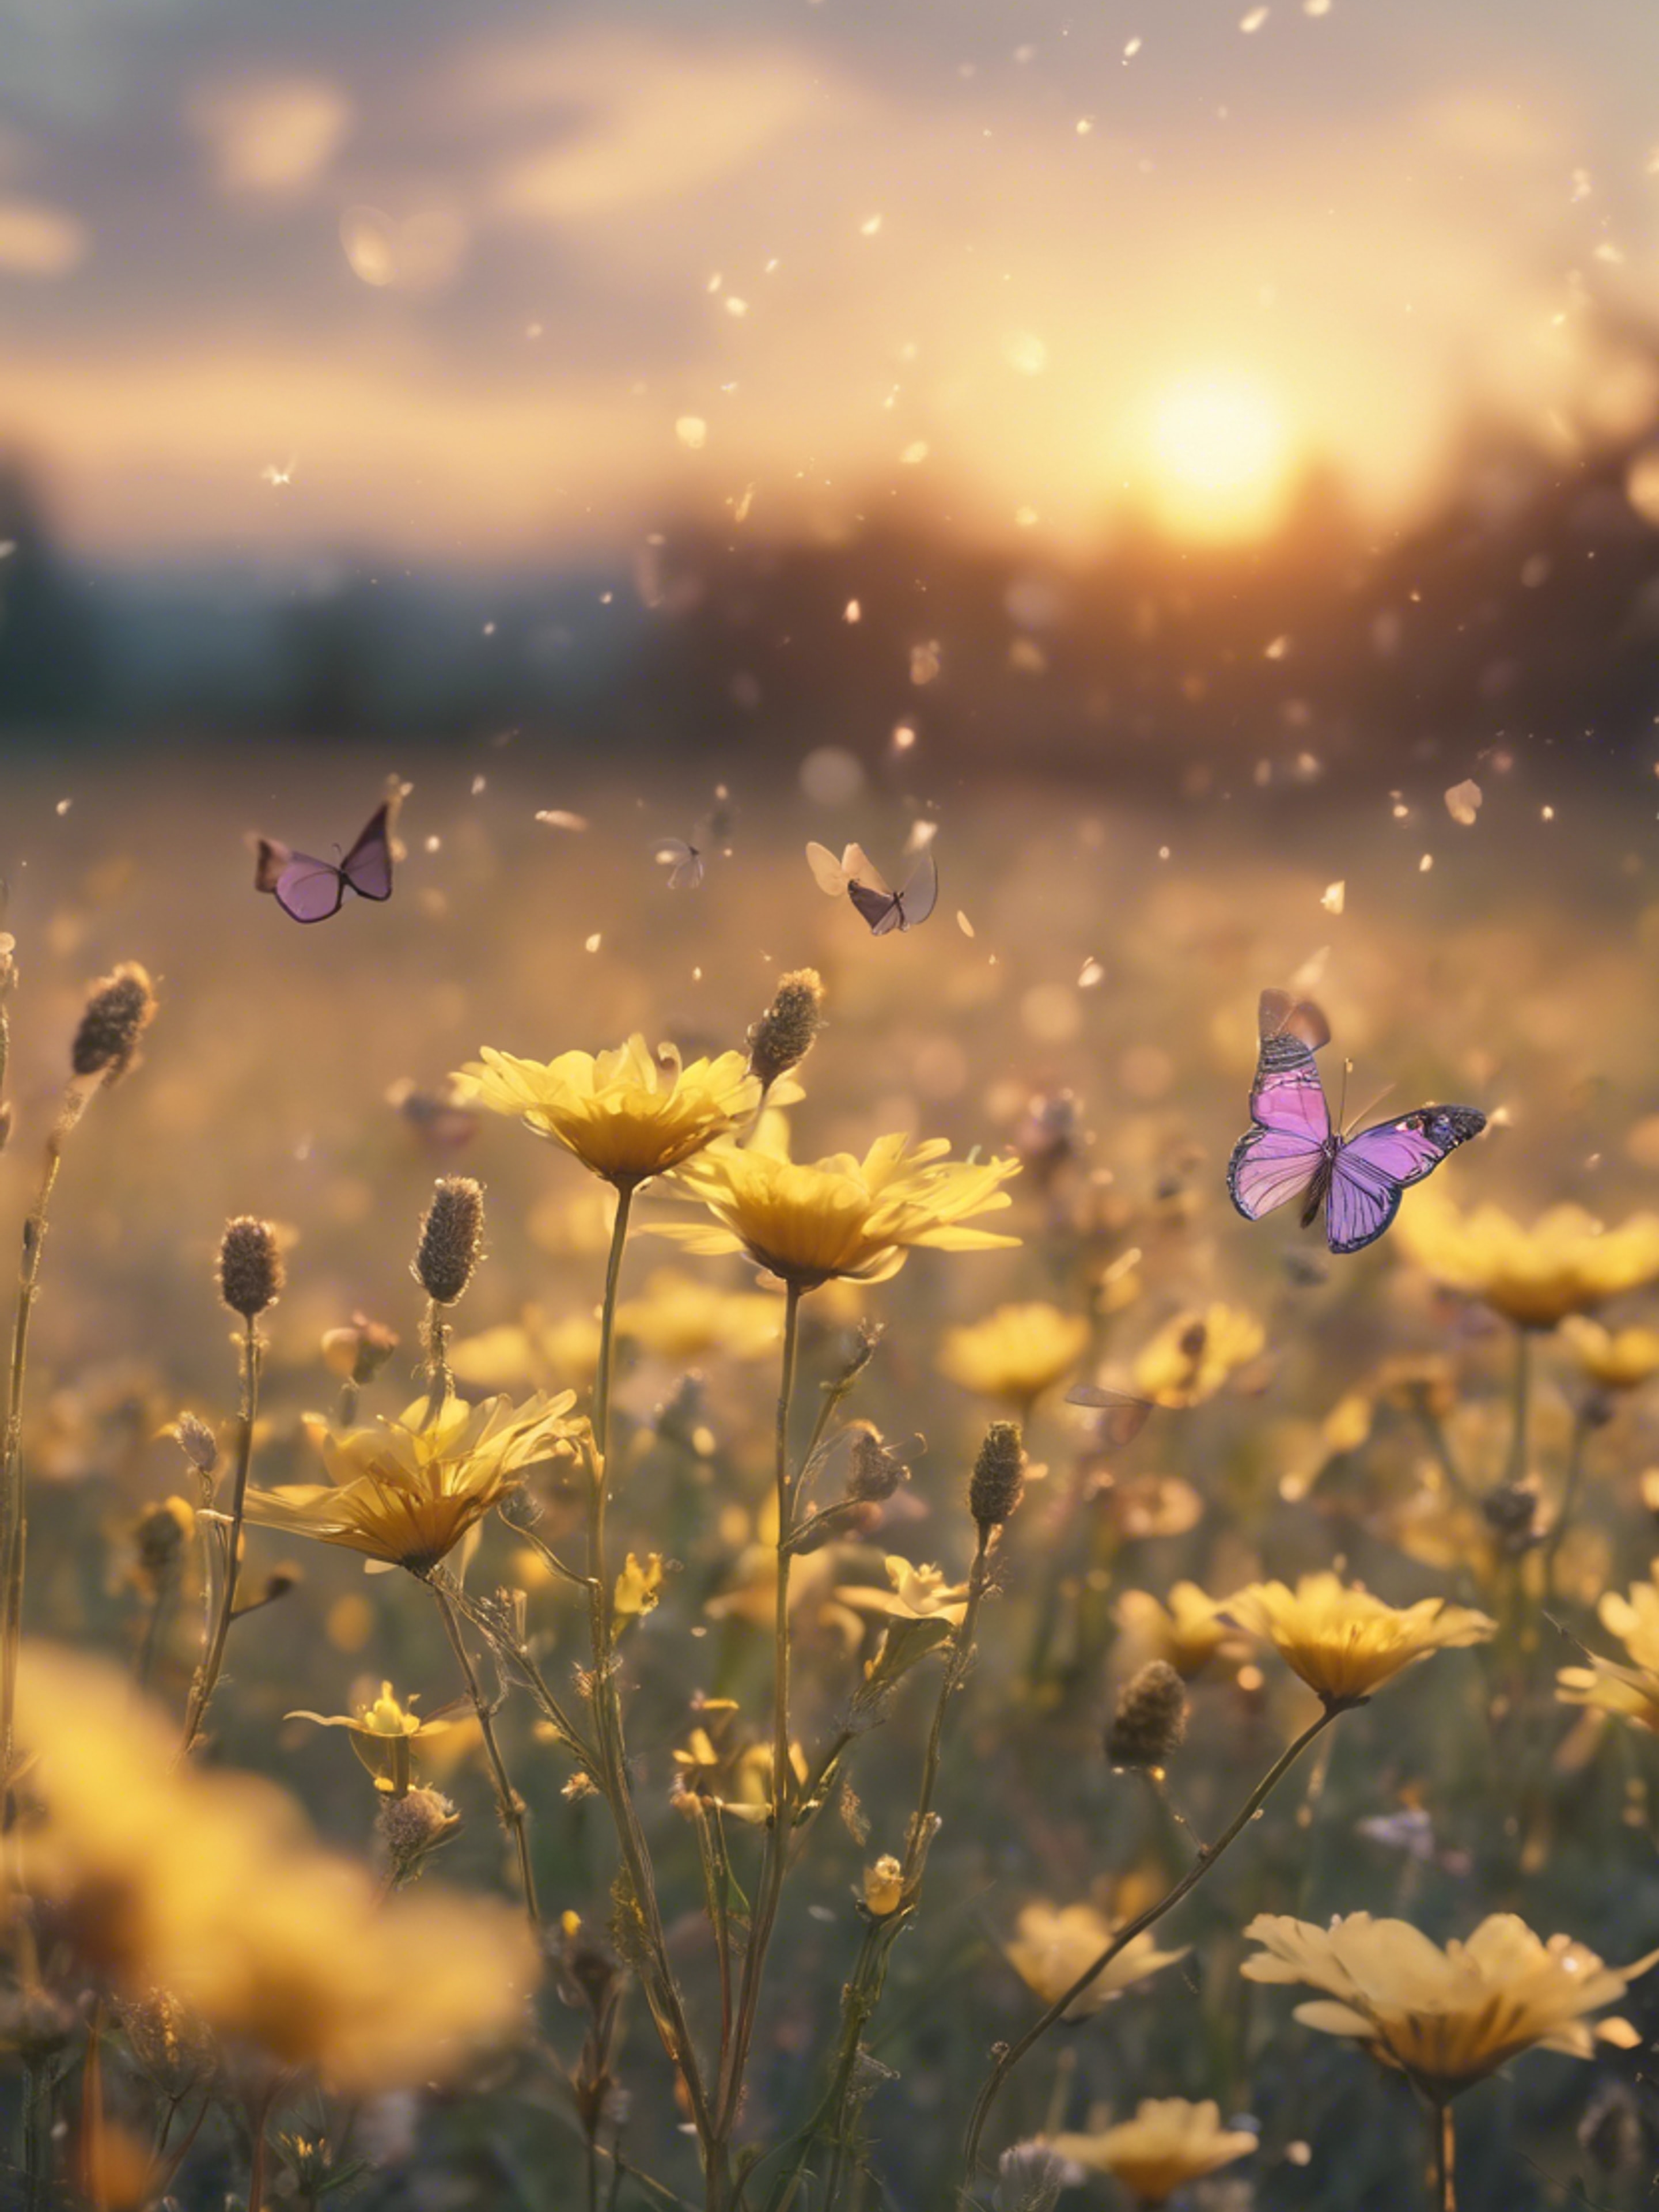 Sunset scene overlooking a meadow filled with pastel yellow flowers and kawaii butterflies fluttering above them. Tapetai[4de922e1f50d428d8d1a]